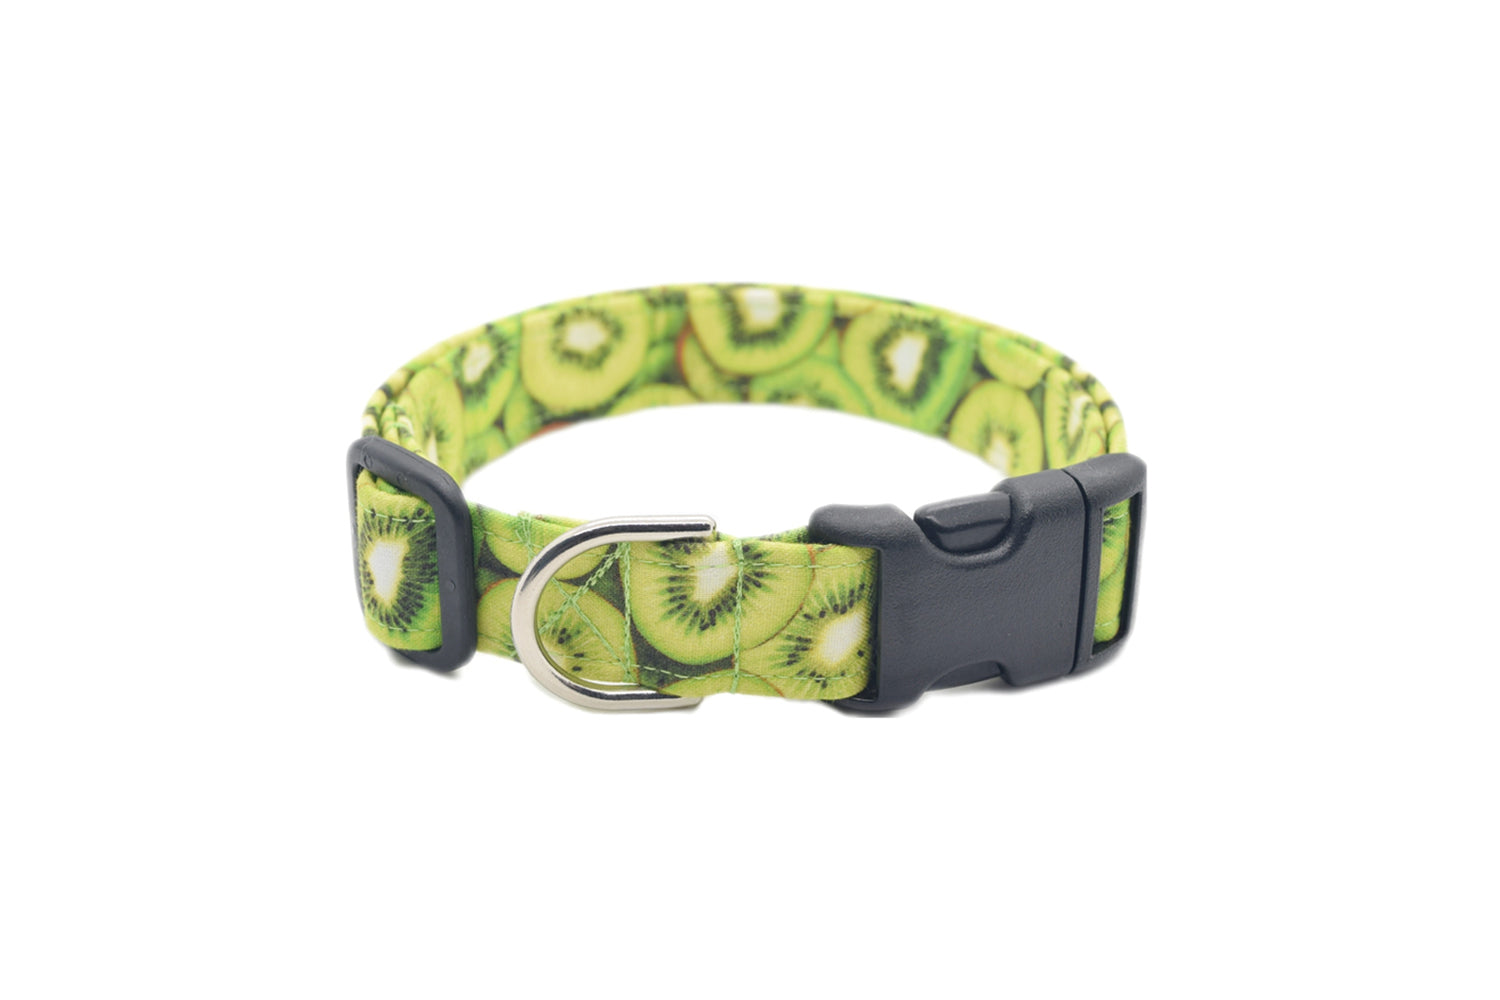 Lime Green Kiwi Dog Collar - Handmade by Kira's Pet Shop